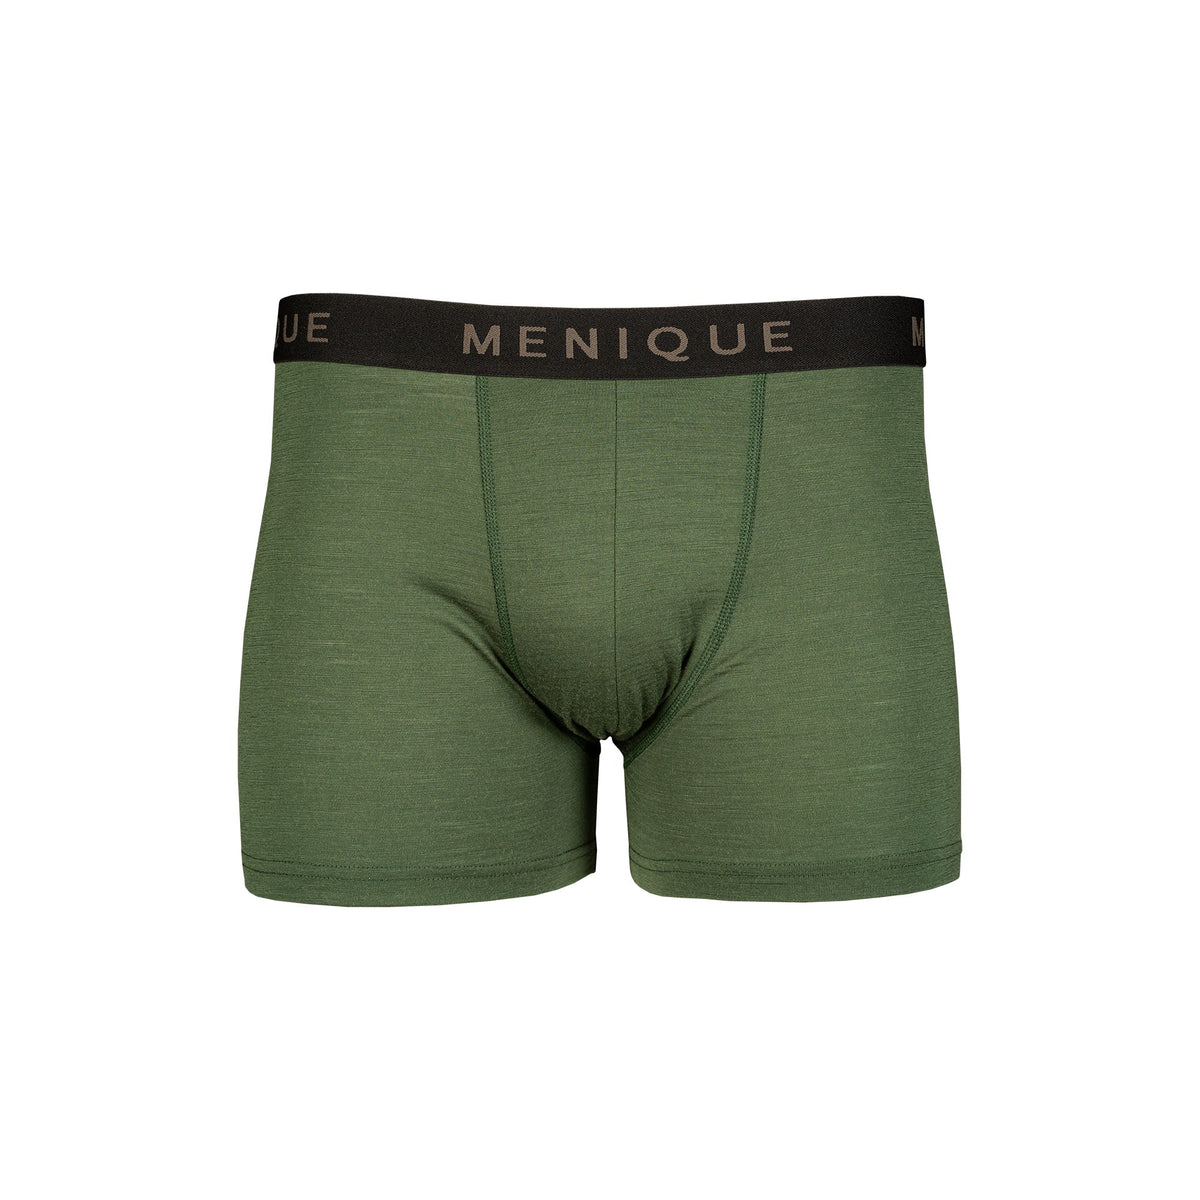 MENIQUE 100% Merino Wool Mens Short Boxer Briefs